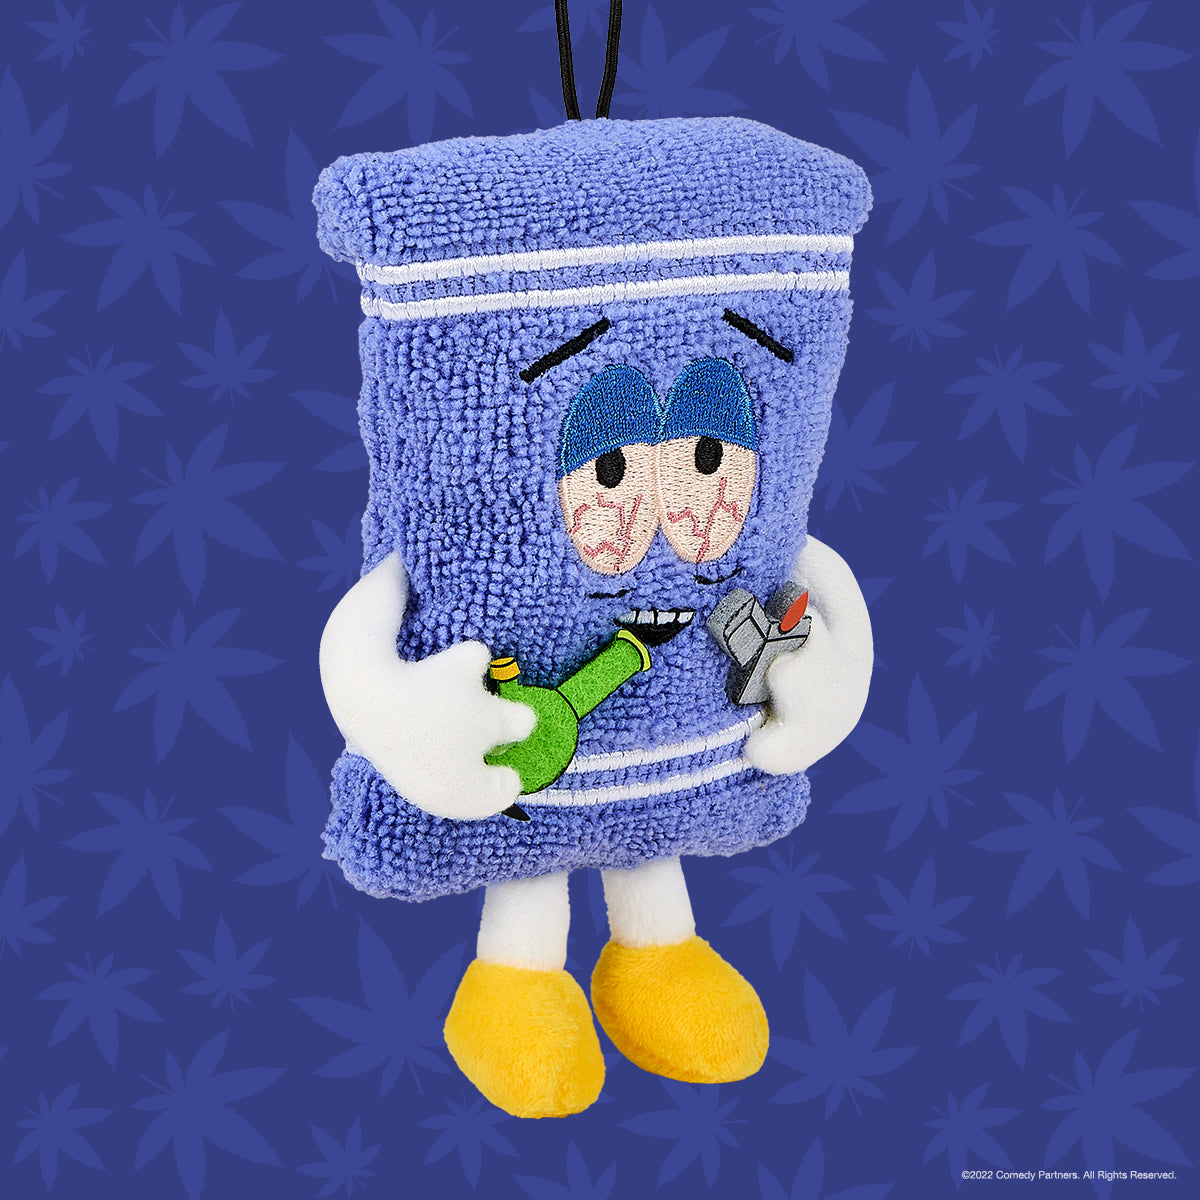 Kidrobot x South Park Towelie Plush Toys & Collectibles - Get them at Kidrobot.com